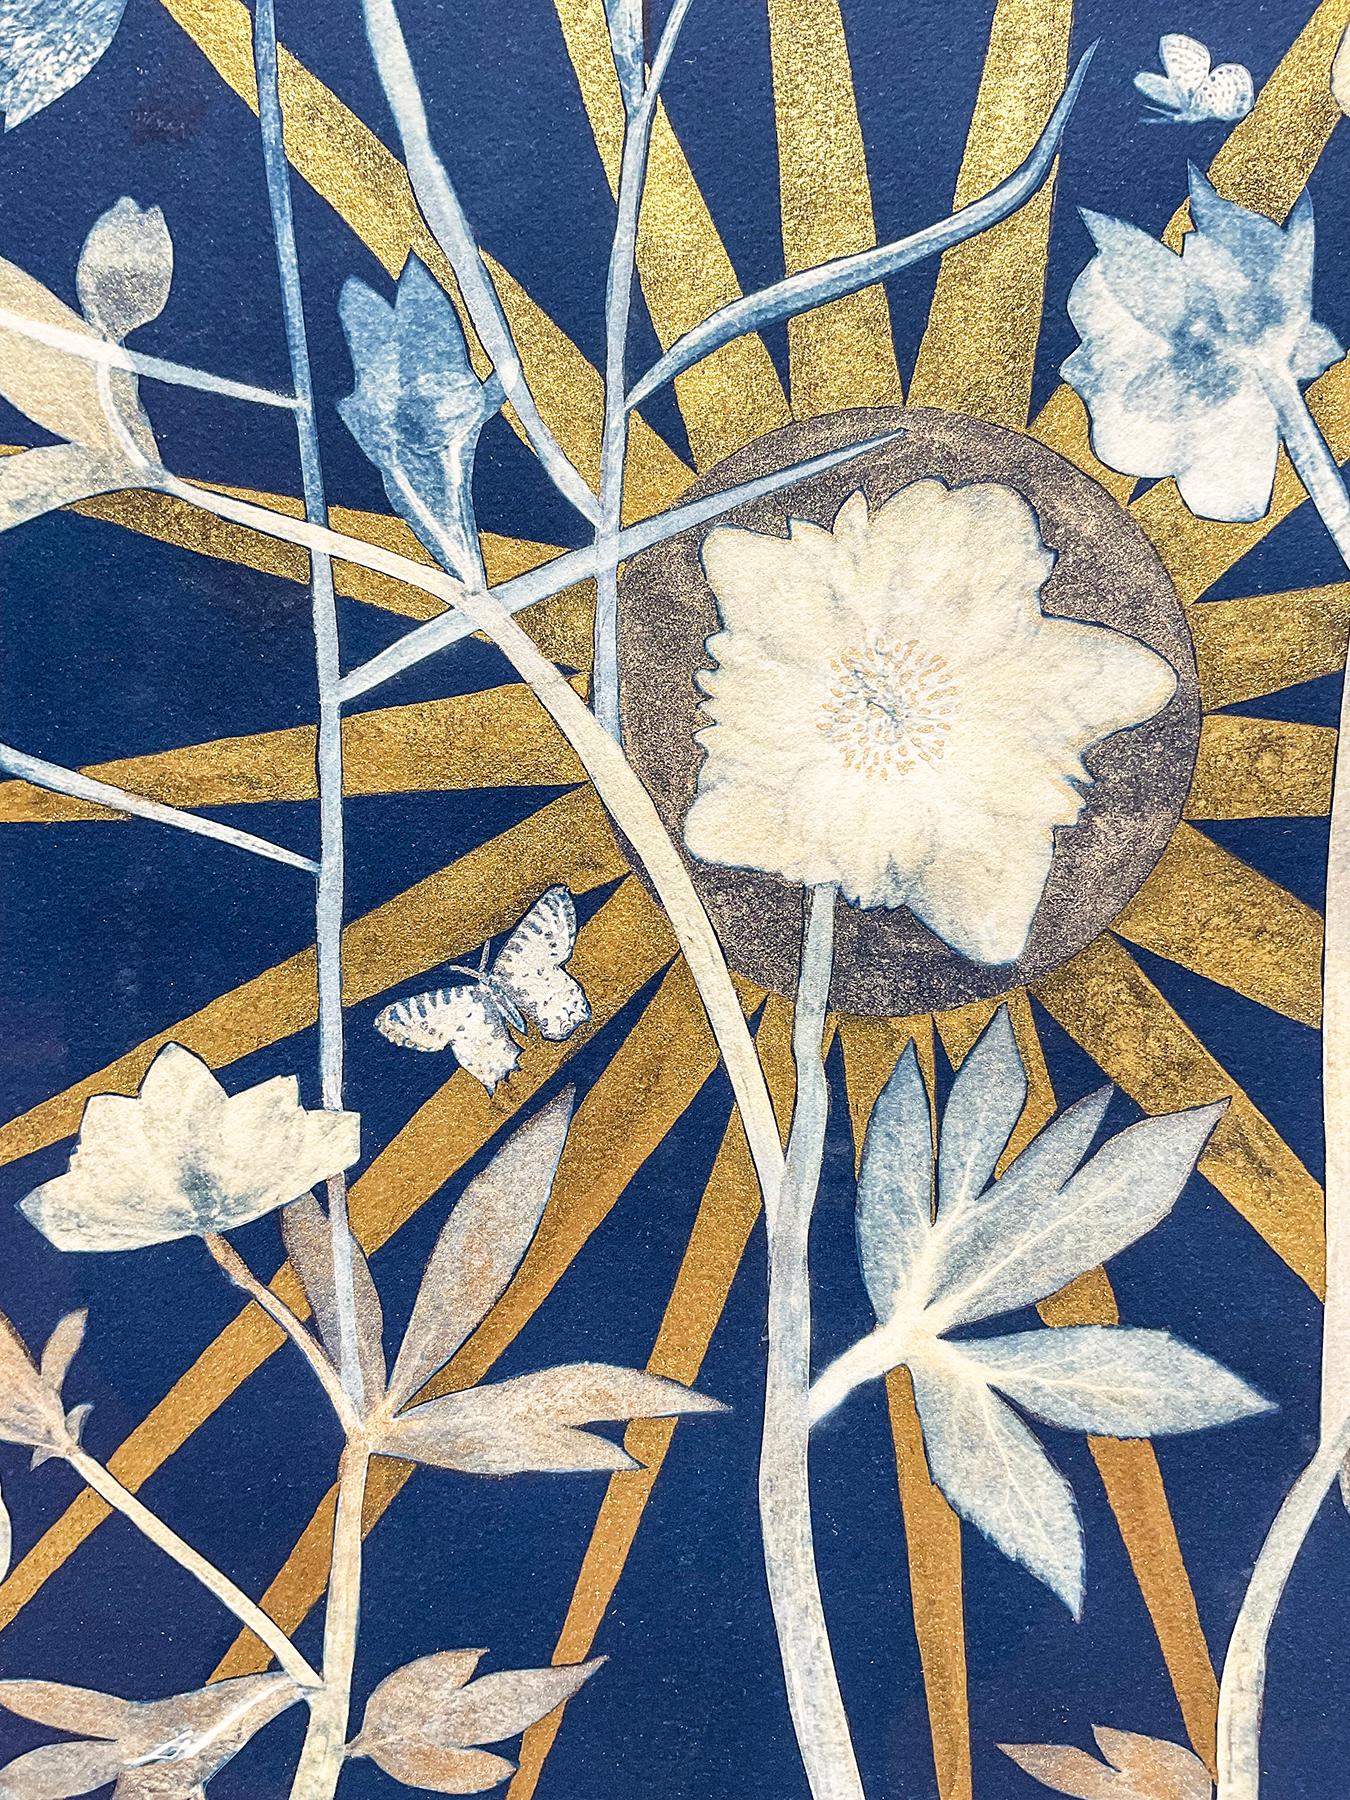 Hellebore, Center Star (Still Life of Golden Sunburst, White Flowers on Indigo) - Blue Figurative Painting by Julia Whitney Barnes